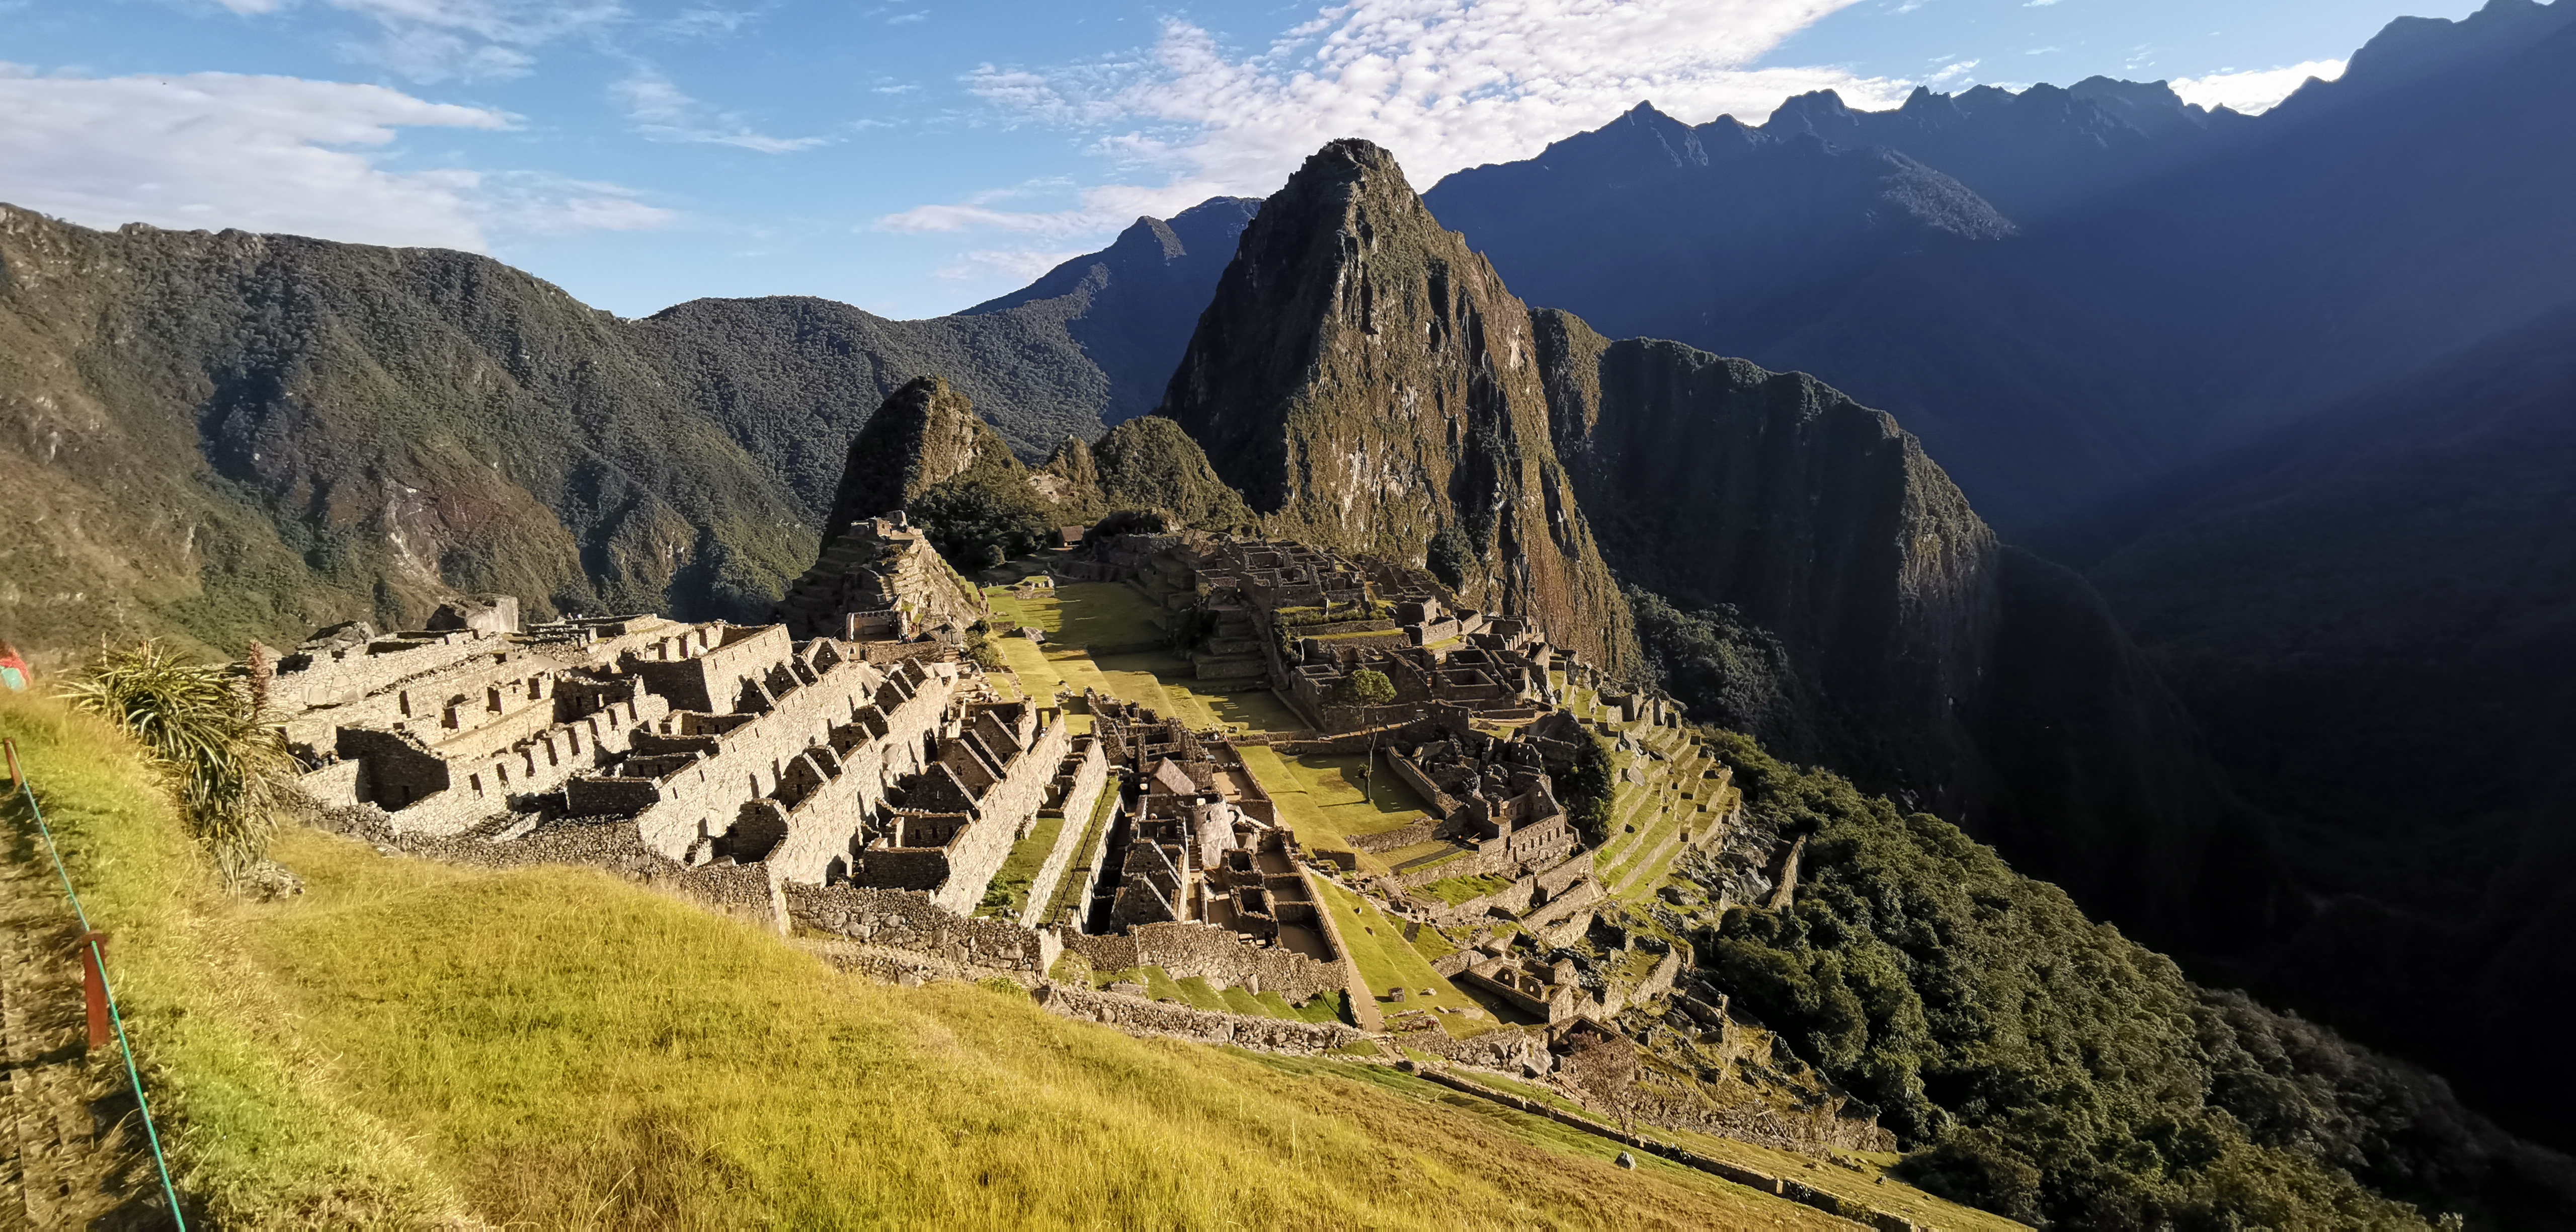 Machu Picchu, az Öreg hegy rejtélye